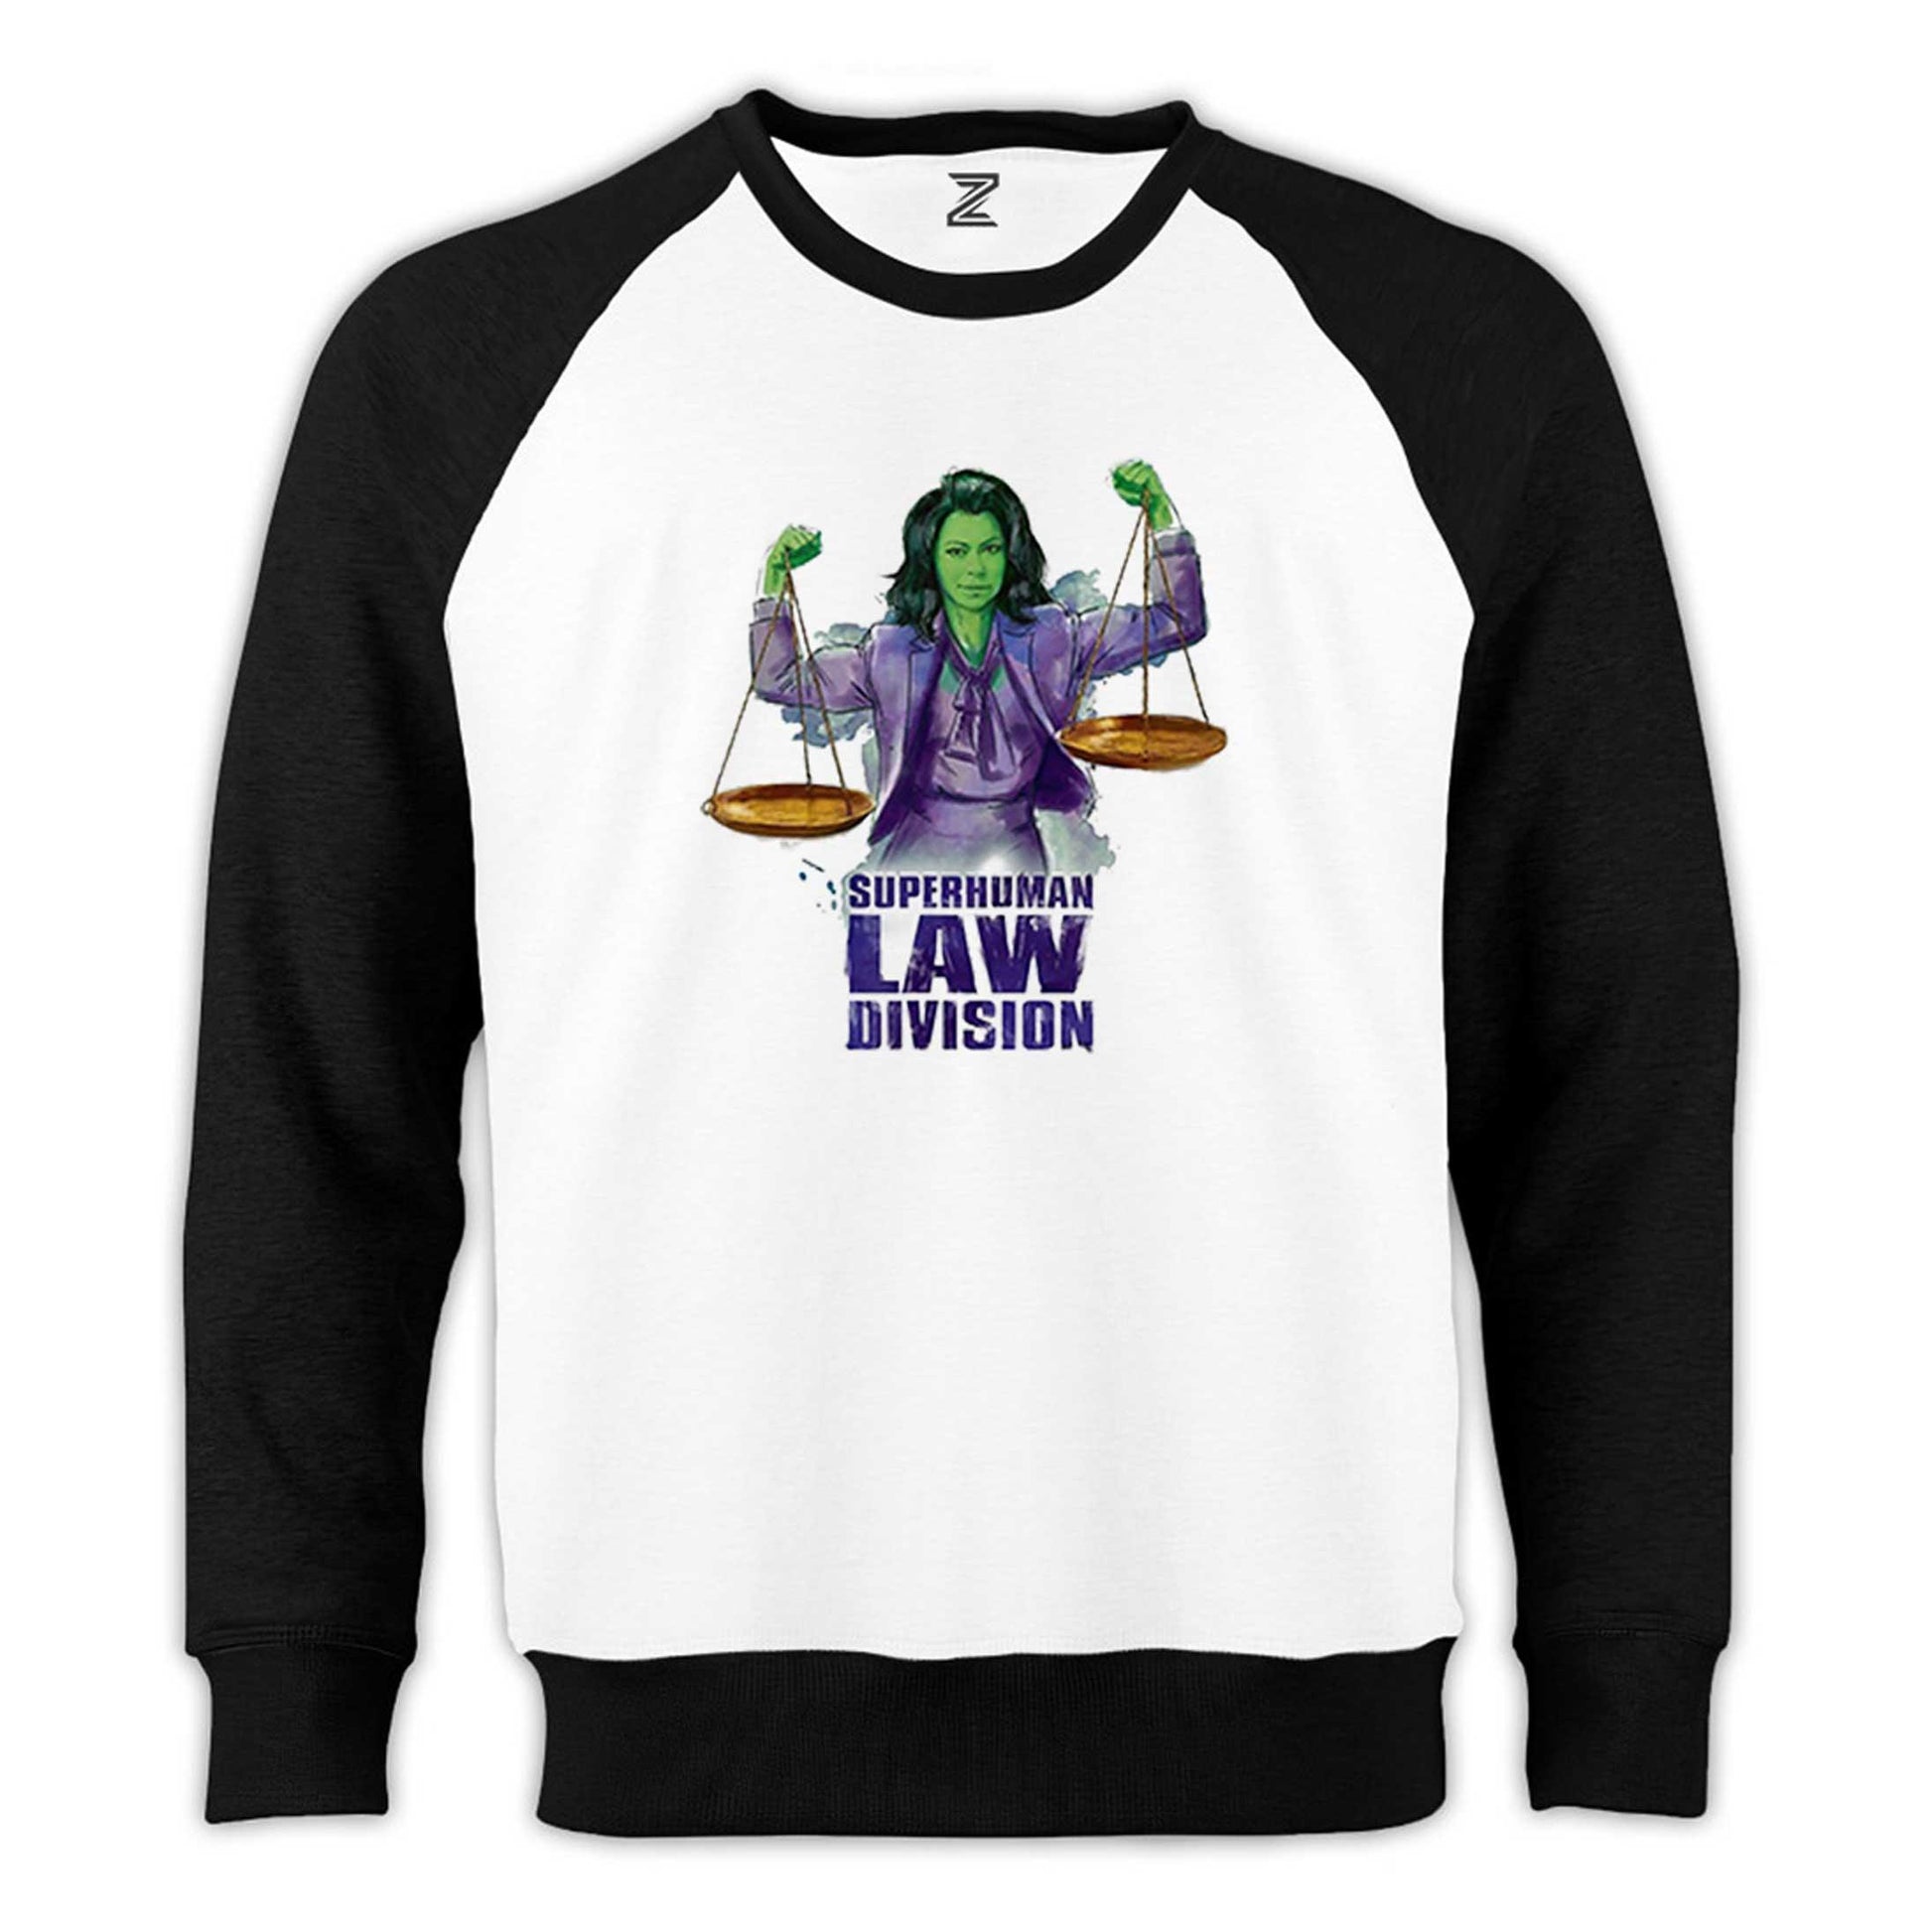 She Hulk SuperHuman Law Division Reglan Kol Beyaz Sweatshirt - Zepplingiyim